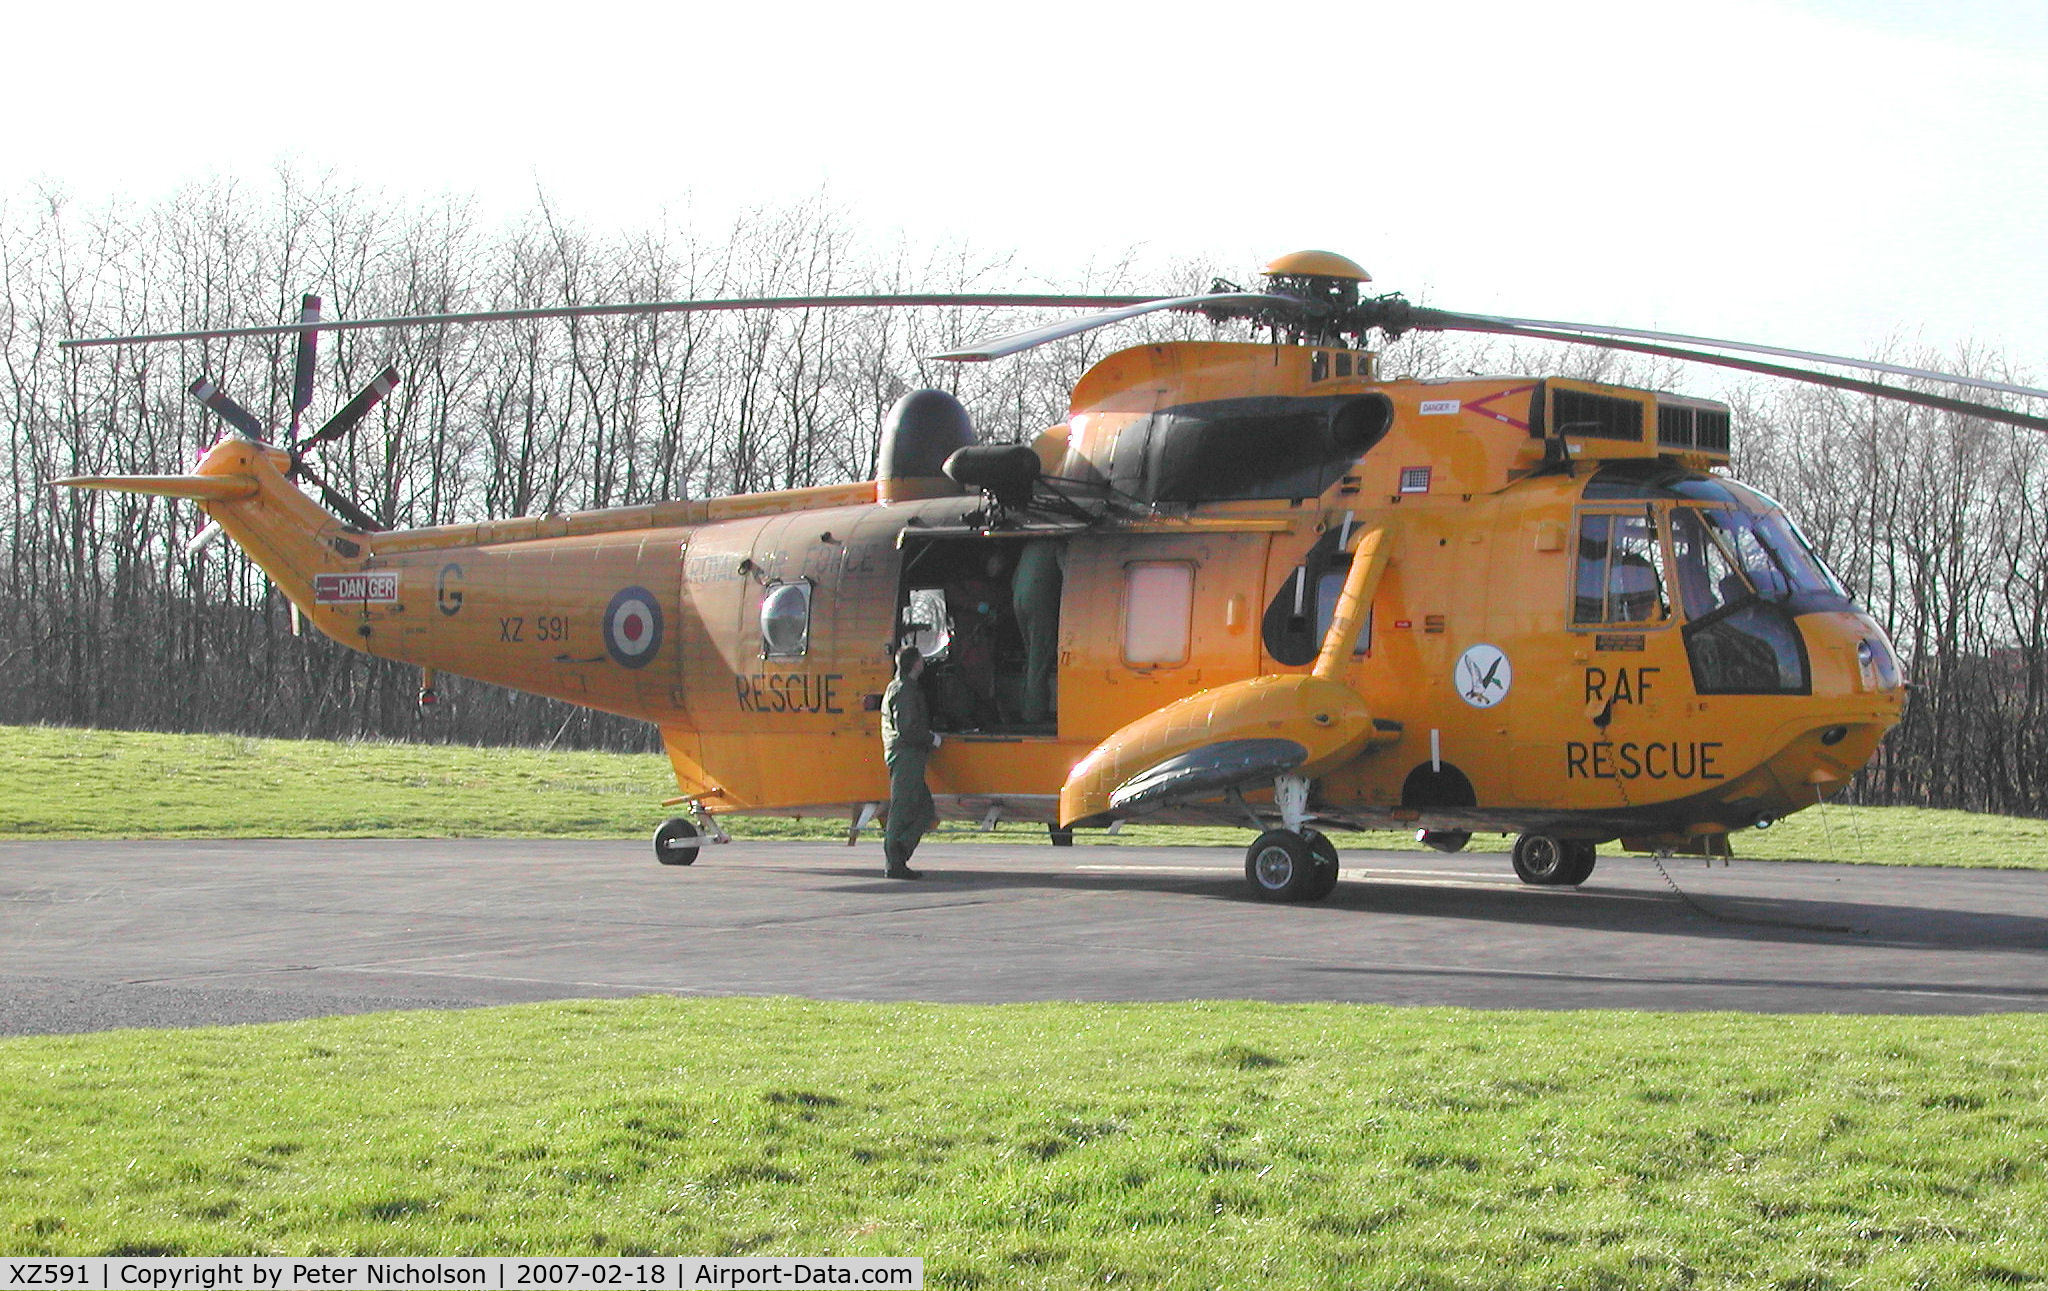 XZ591, 1978 Westland Sea King HAR.3 C/N WA857, Sea King HAR.3, callsign Rescue 131, of 202 Squadron at RAF Boulmer on the Cumberland Infirmary helipad in February 2007